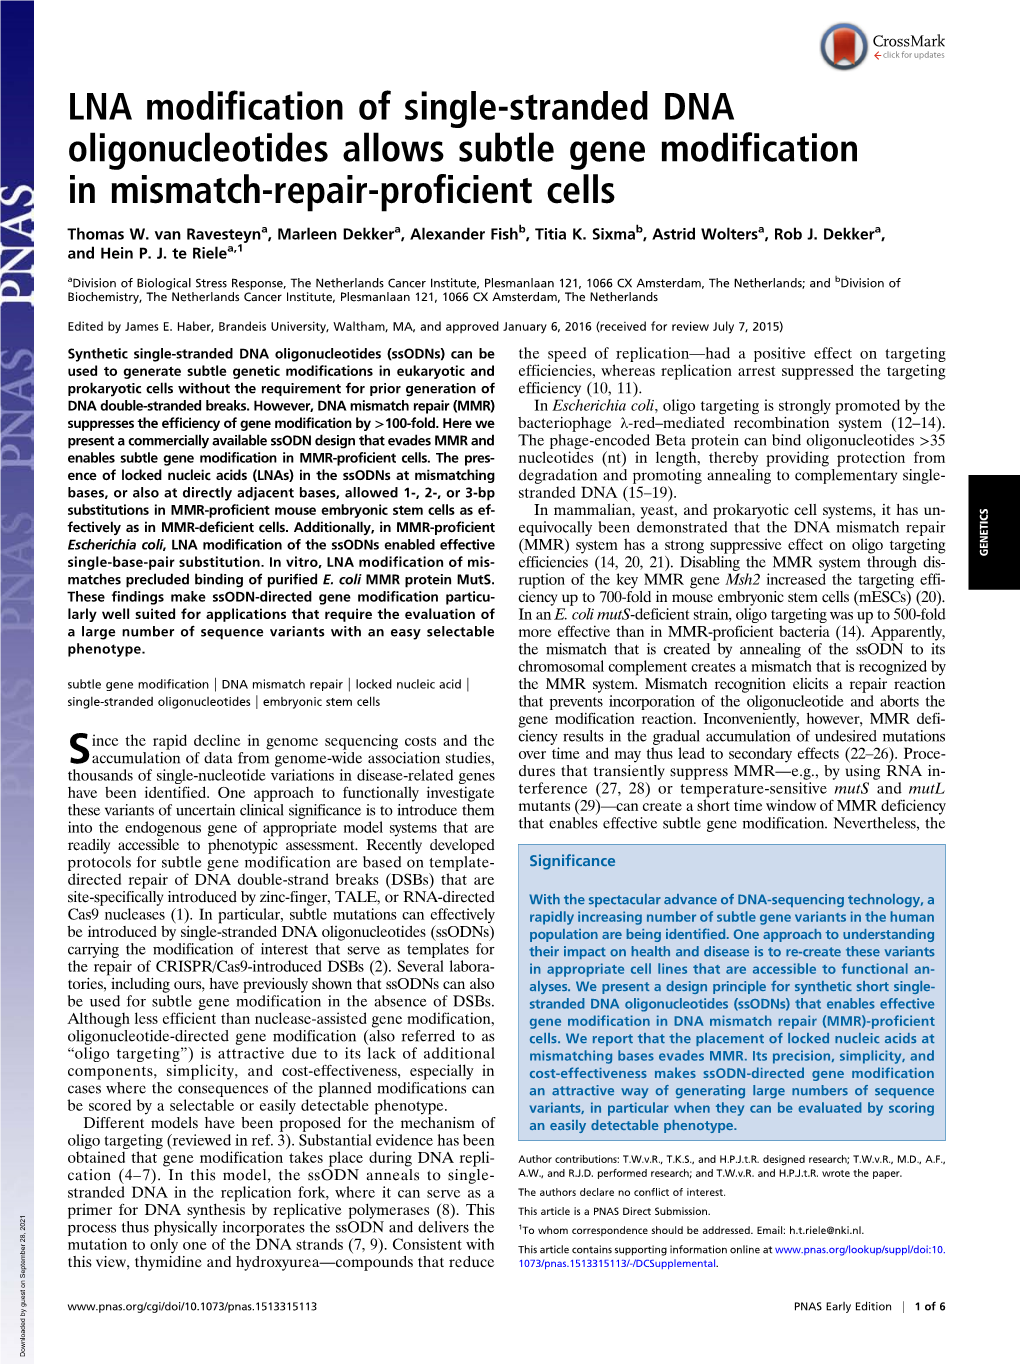 LNA Modification of Single-Stranded DNA Oligonucleotides Allows Subtle Gene Modification in Mismatch-Repair-Proficient Cells